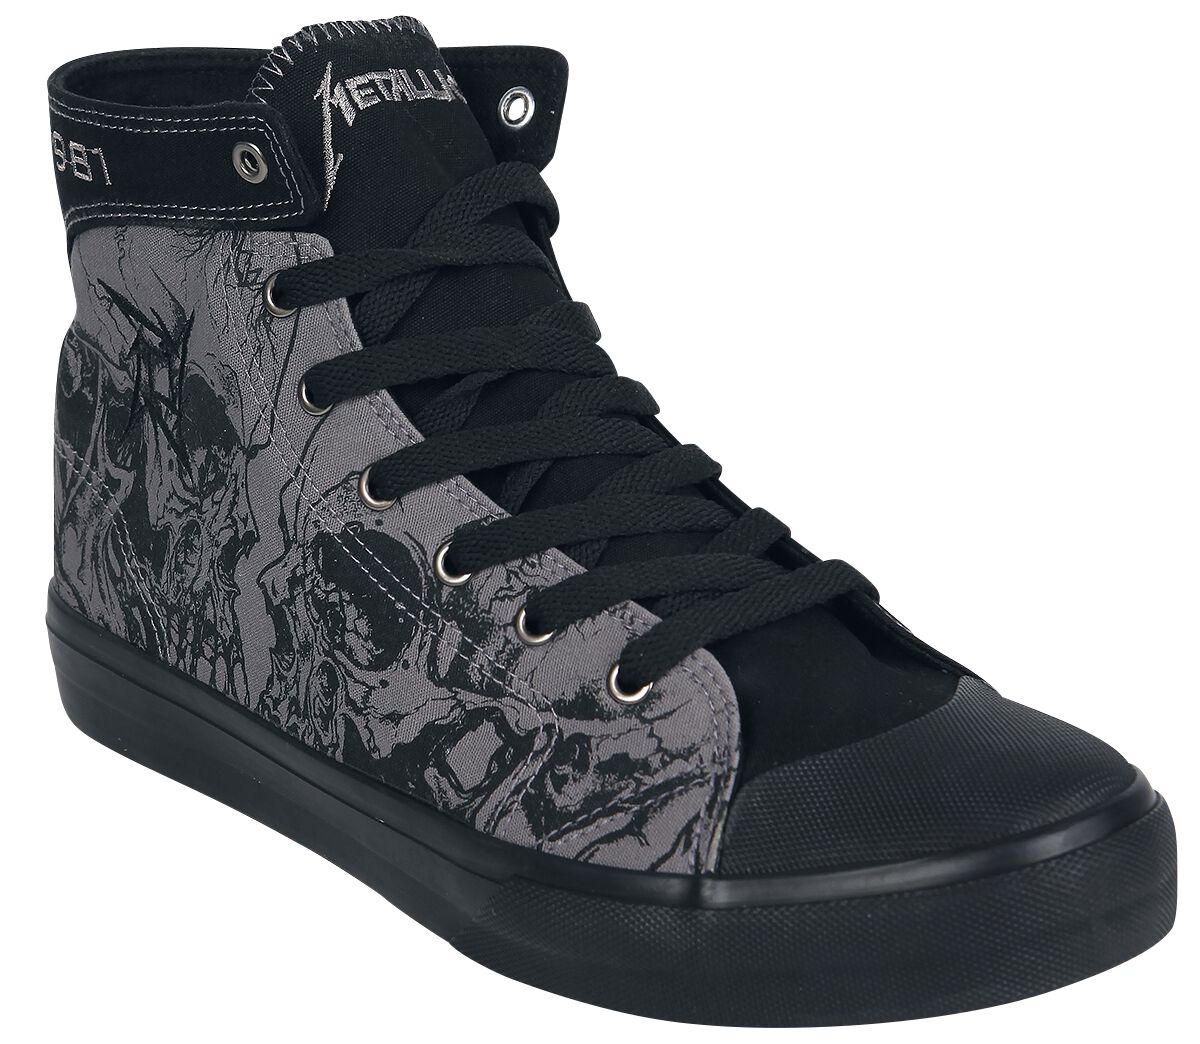 Metallica Sneaker high - EMP Signature Collection - EU37 bis EU47 - Größe EU37 - grau/schwarz  - EMP exklusives Merchandise!